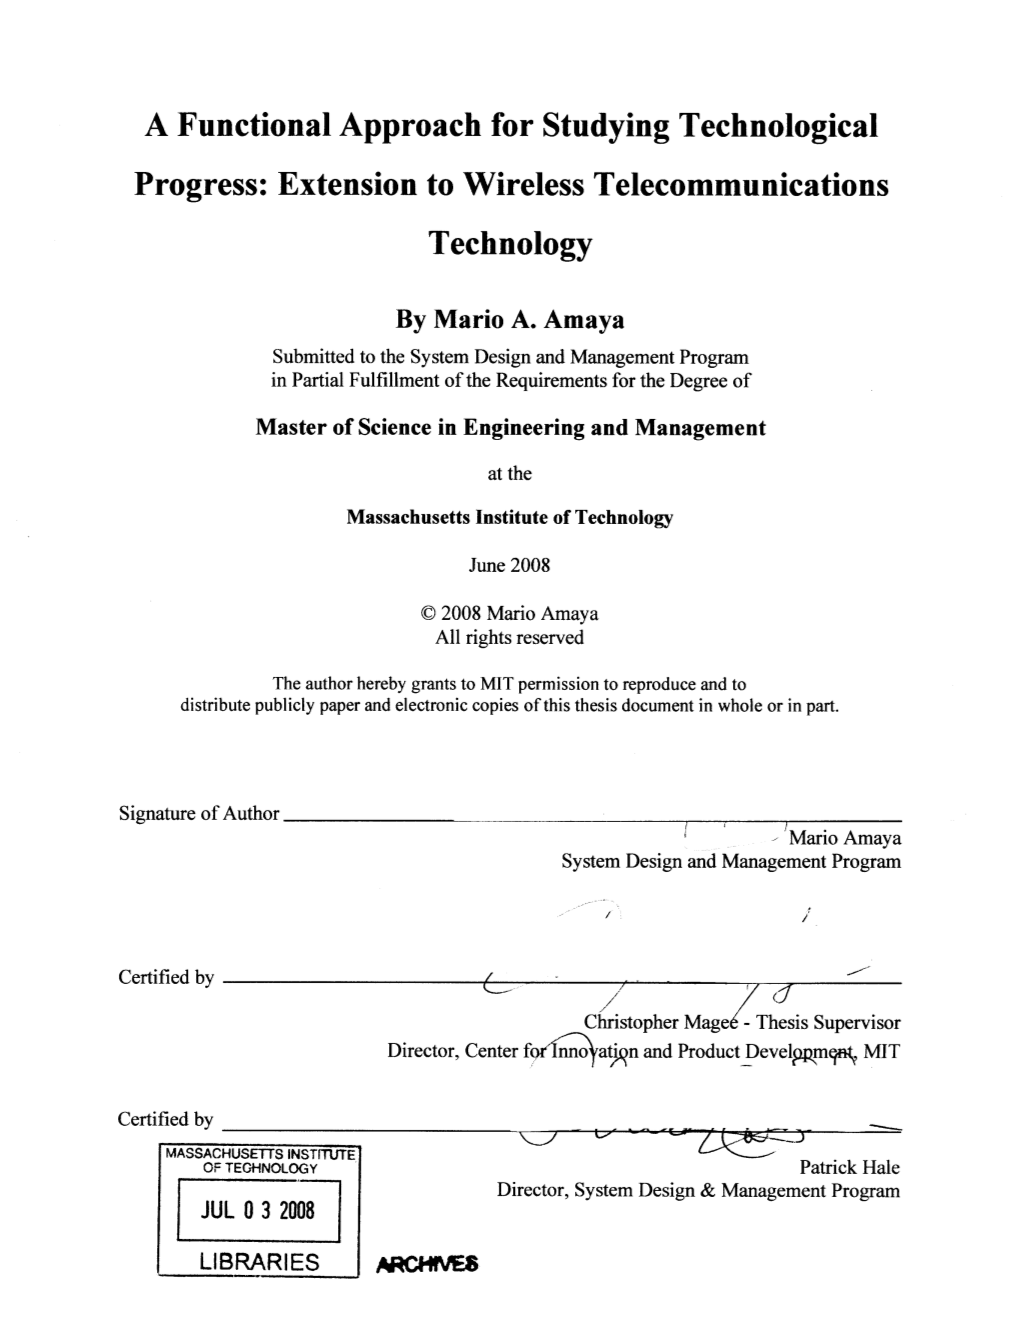 Extension to Wireless Telecommunications Technology